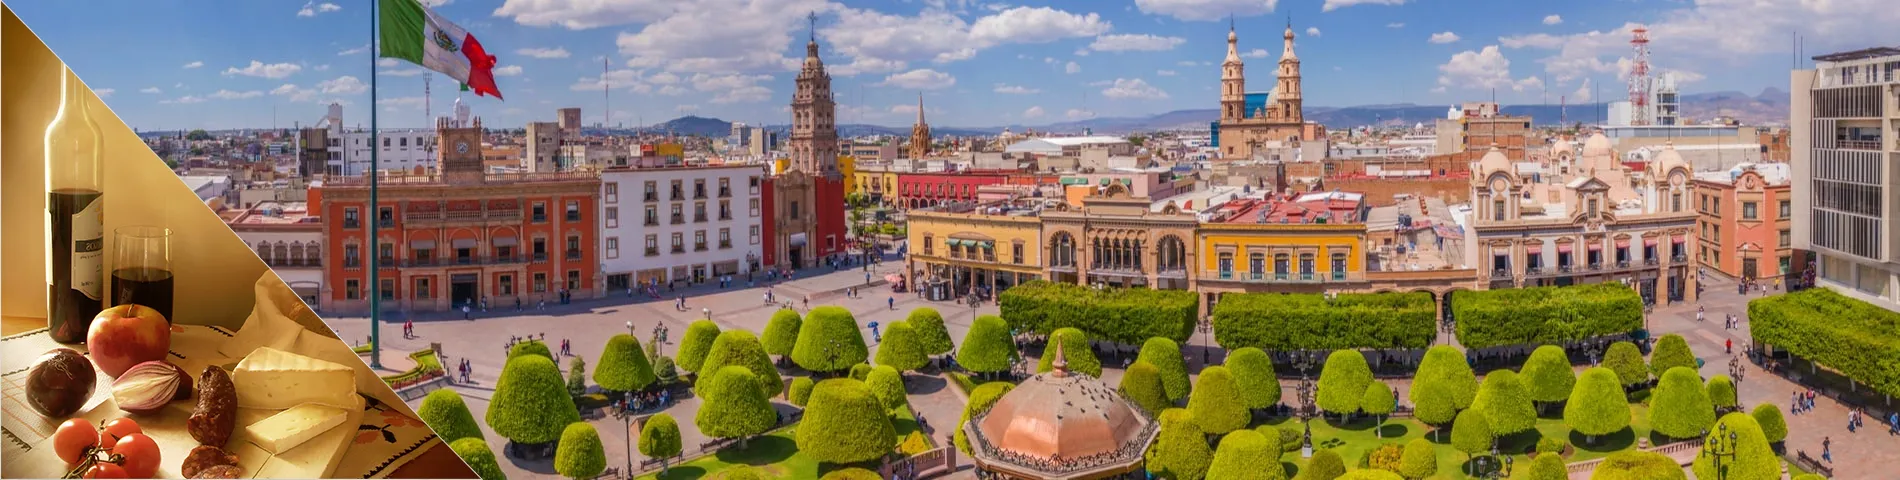 Guanajuato - Spanska & kultur